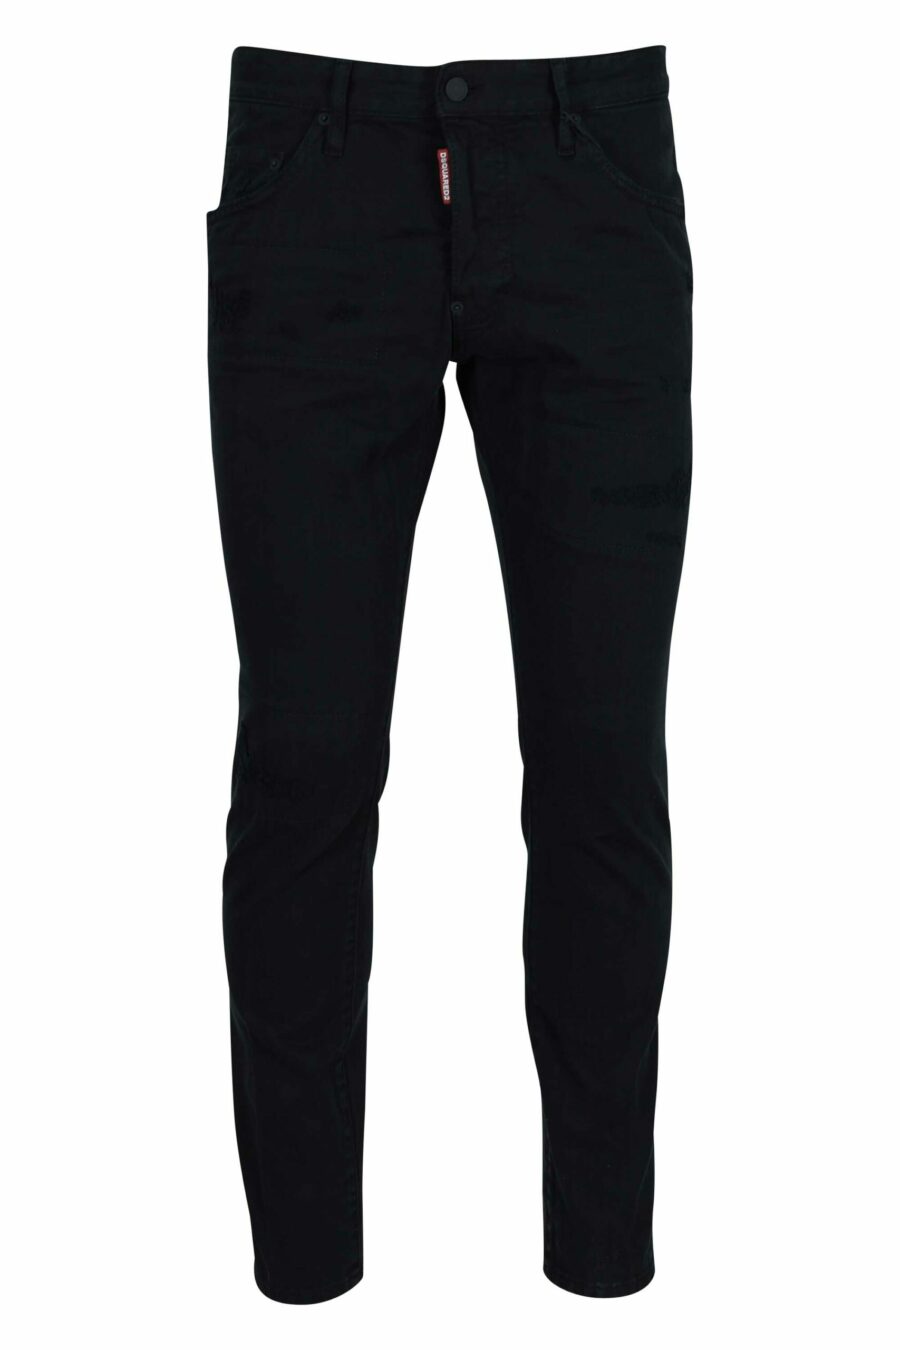 Black "skater jean" jeans with logo - 8054148472320 scaled